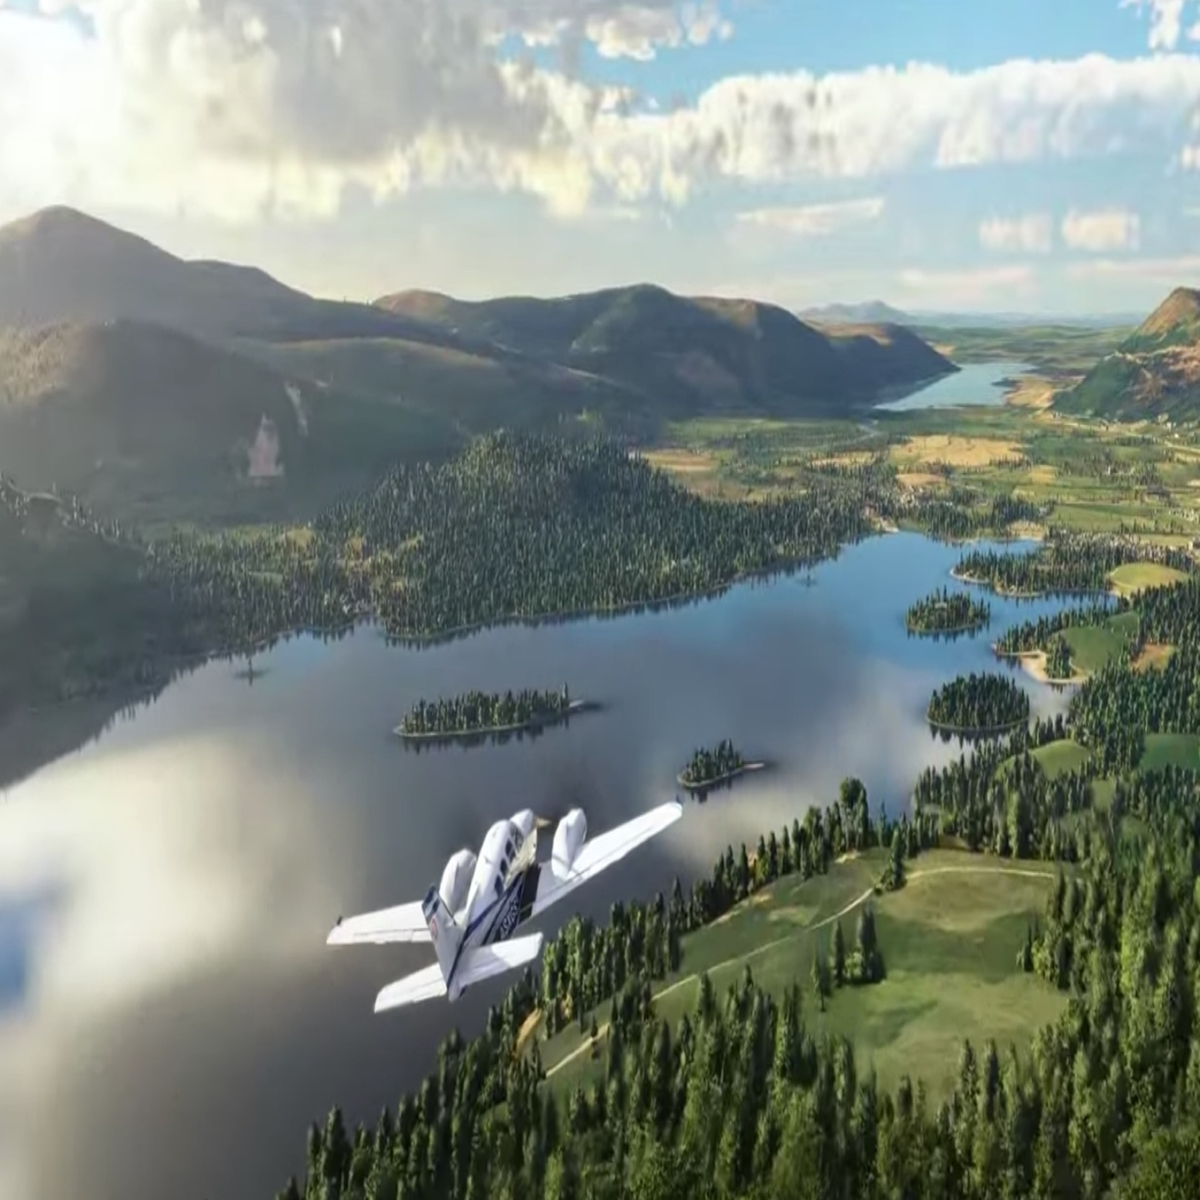 Xbox on X: STATUS: ARRIVED​ ​ Microsoft Flight Simulator is